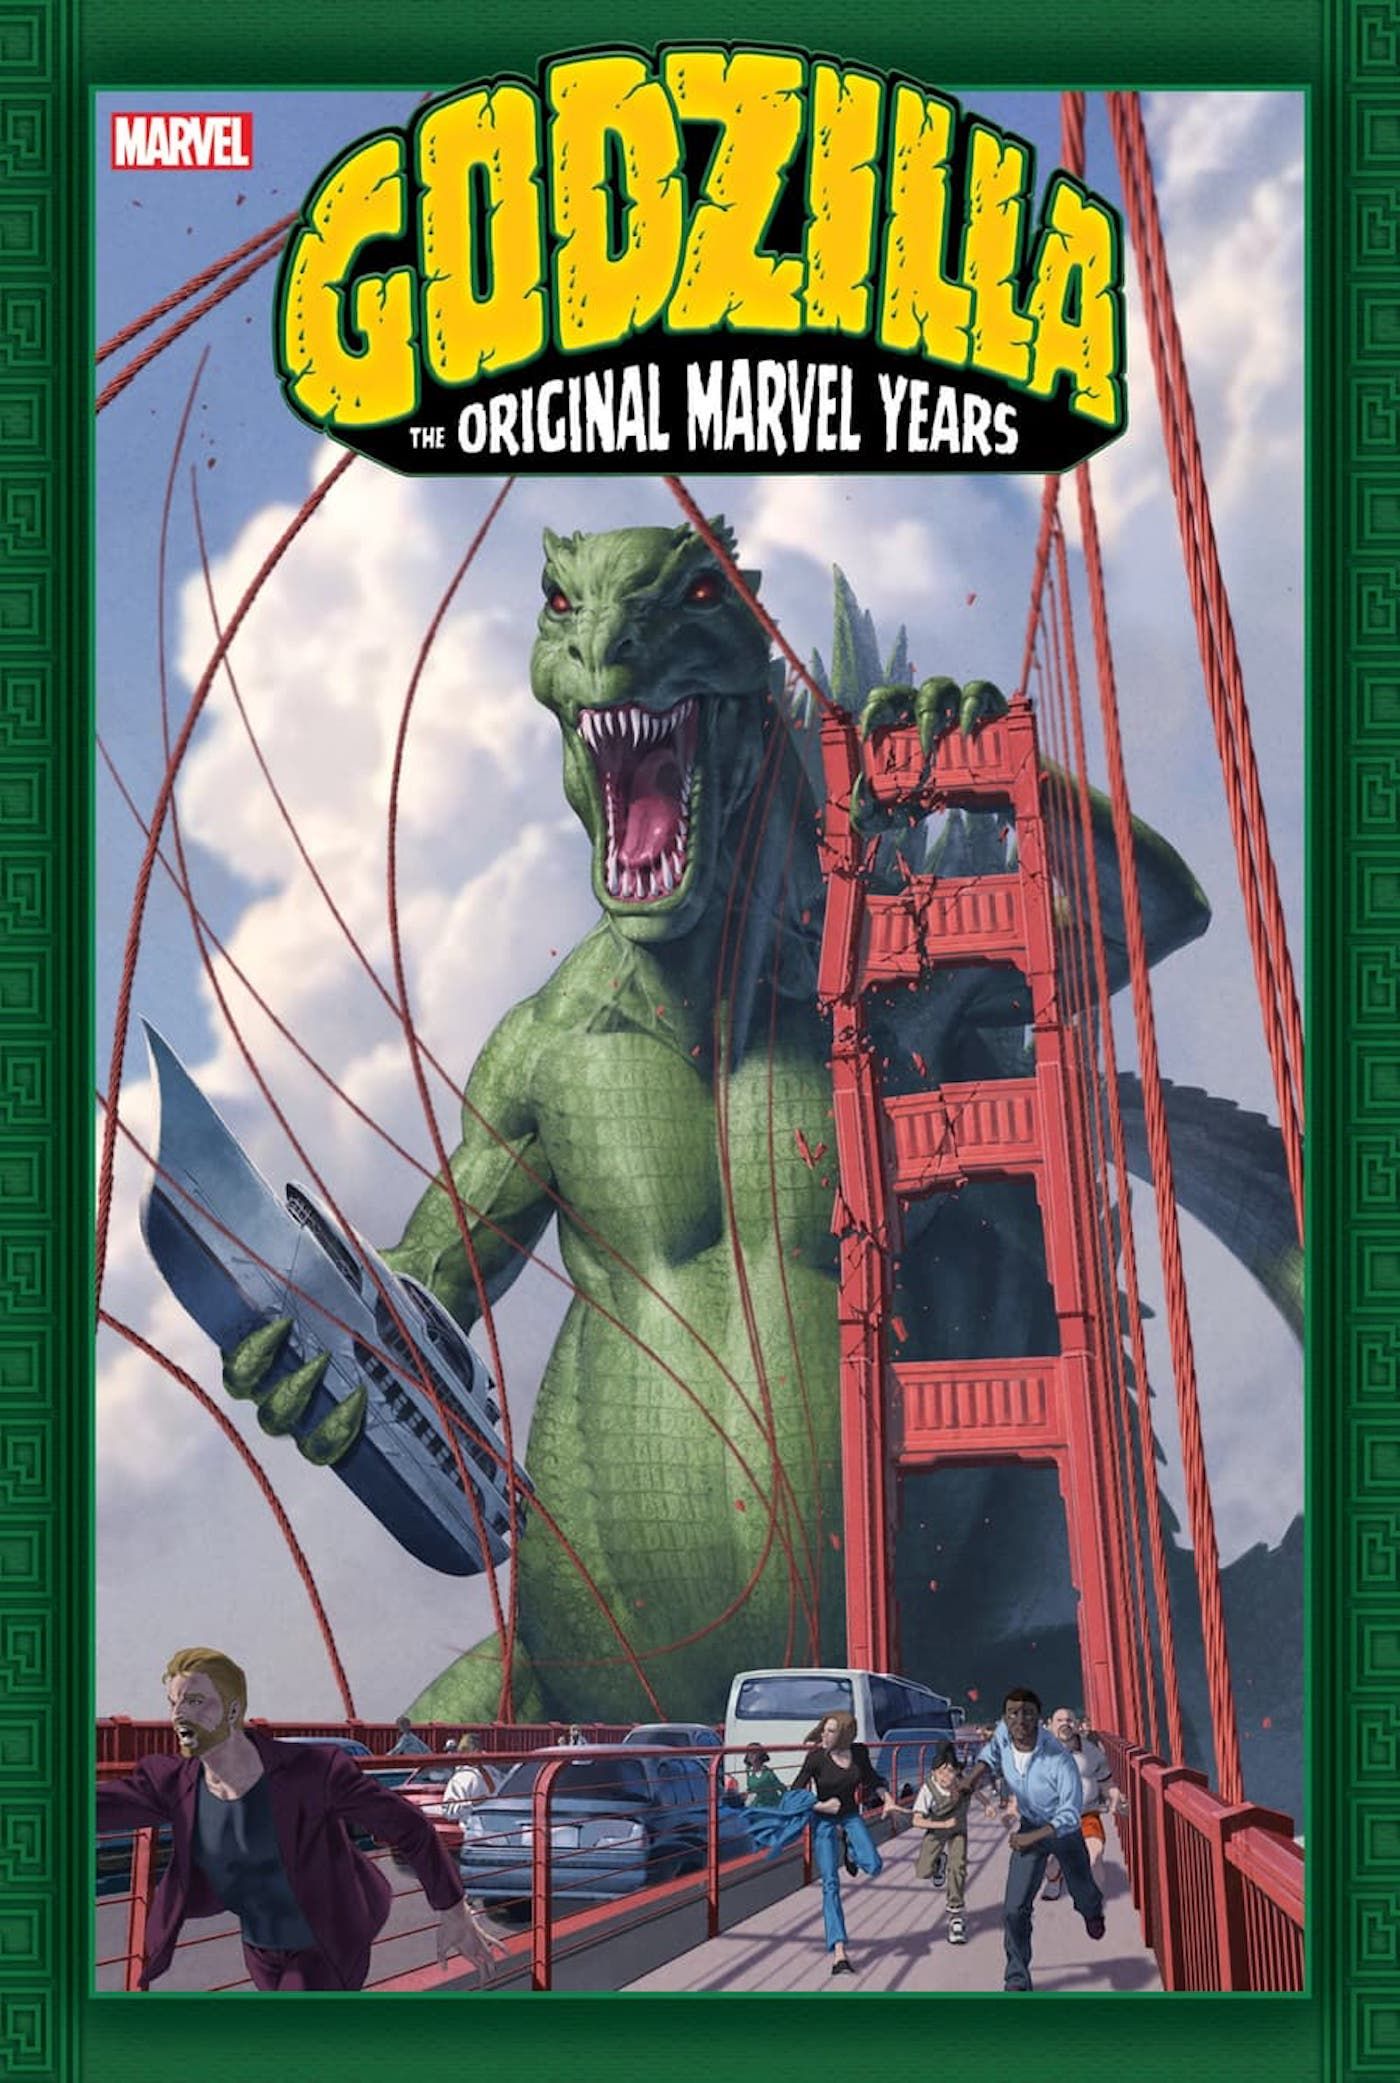 Marvel’s Long Out of Print Godzilla Comics Return in New Omnibus